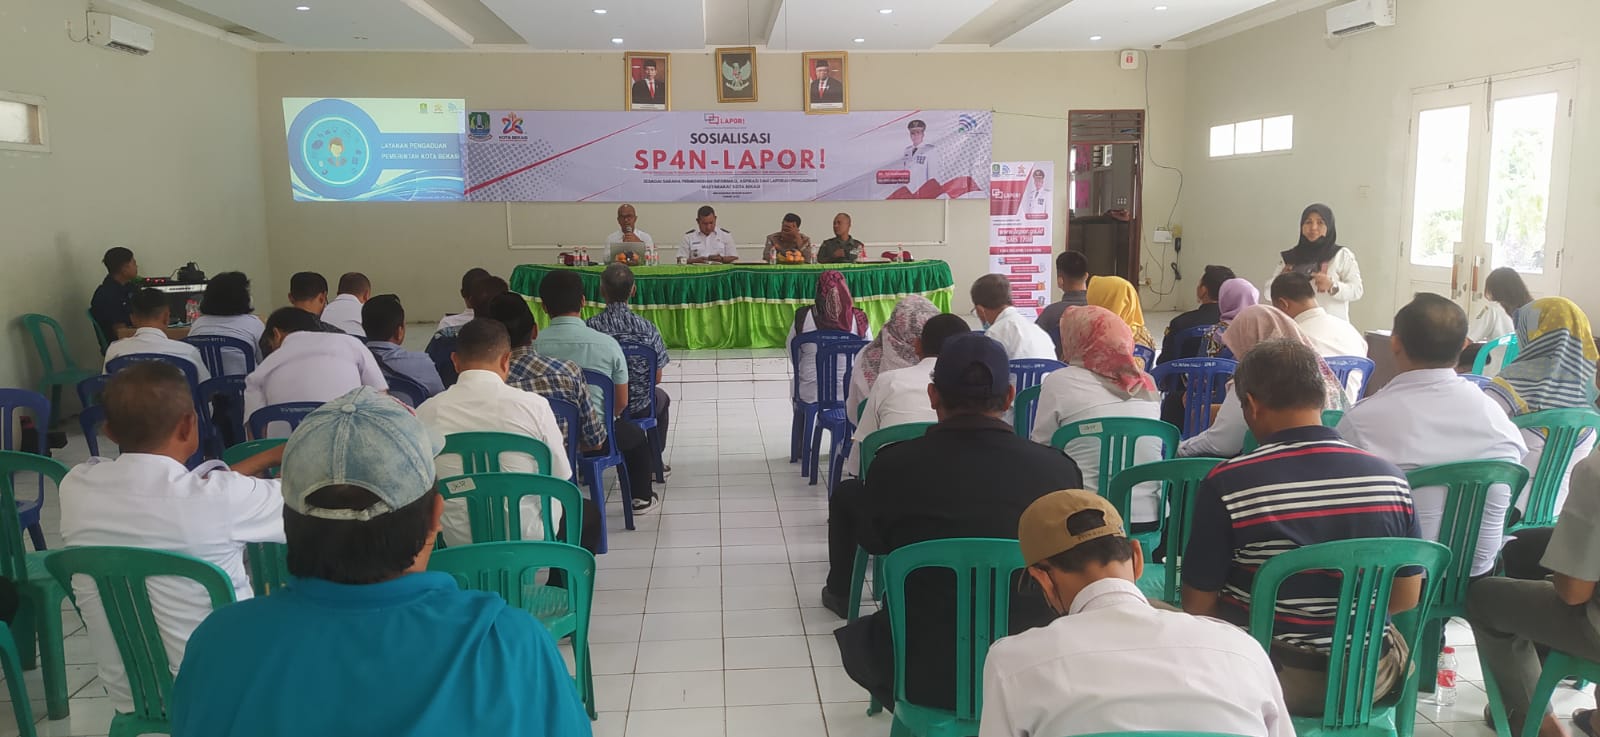 Diskominfostandi Kota Bekasi Gelar Sosialisasi SP4N-LAPOR di Kecamatan Bekasi Barat